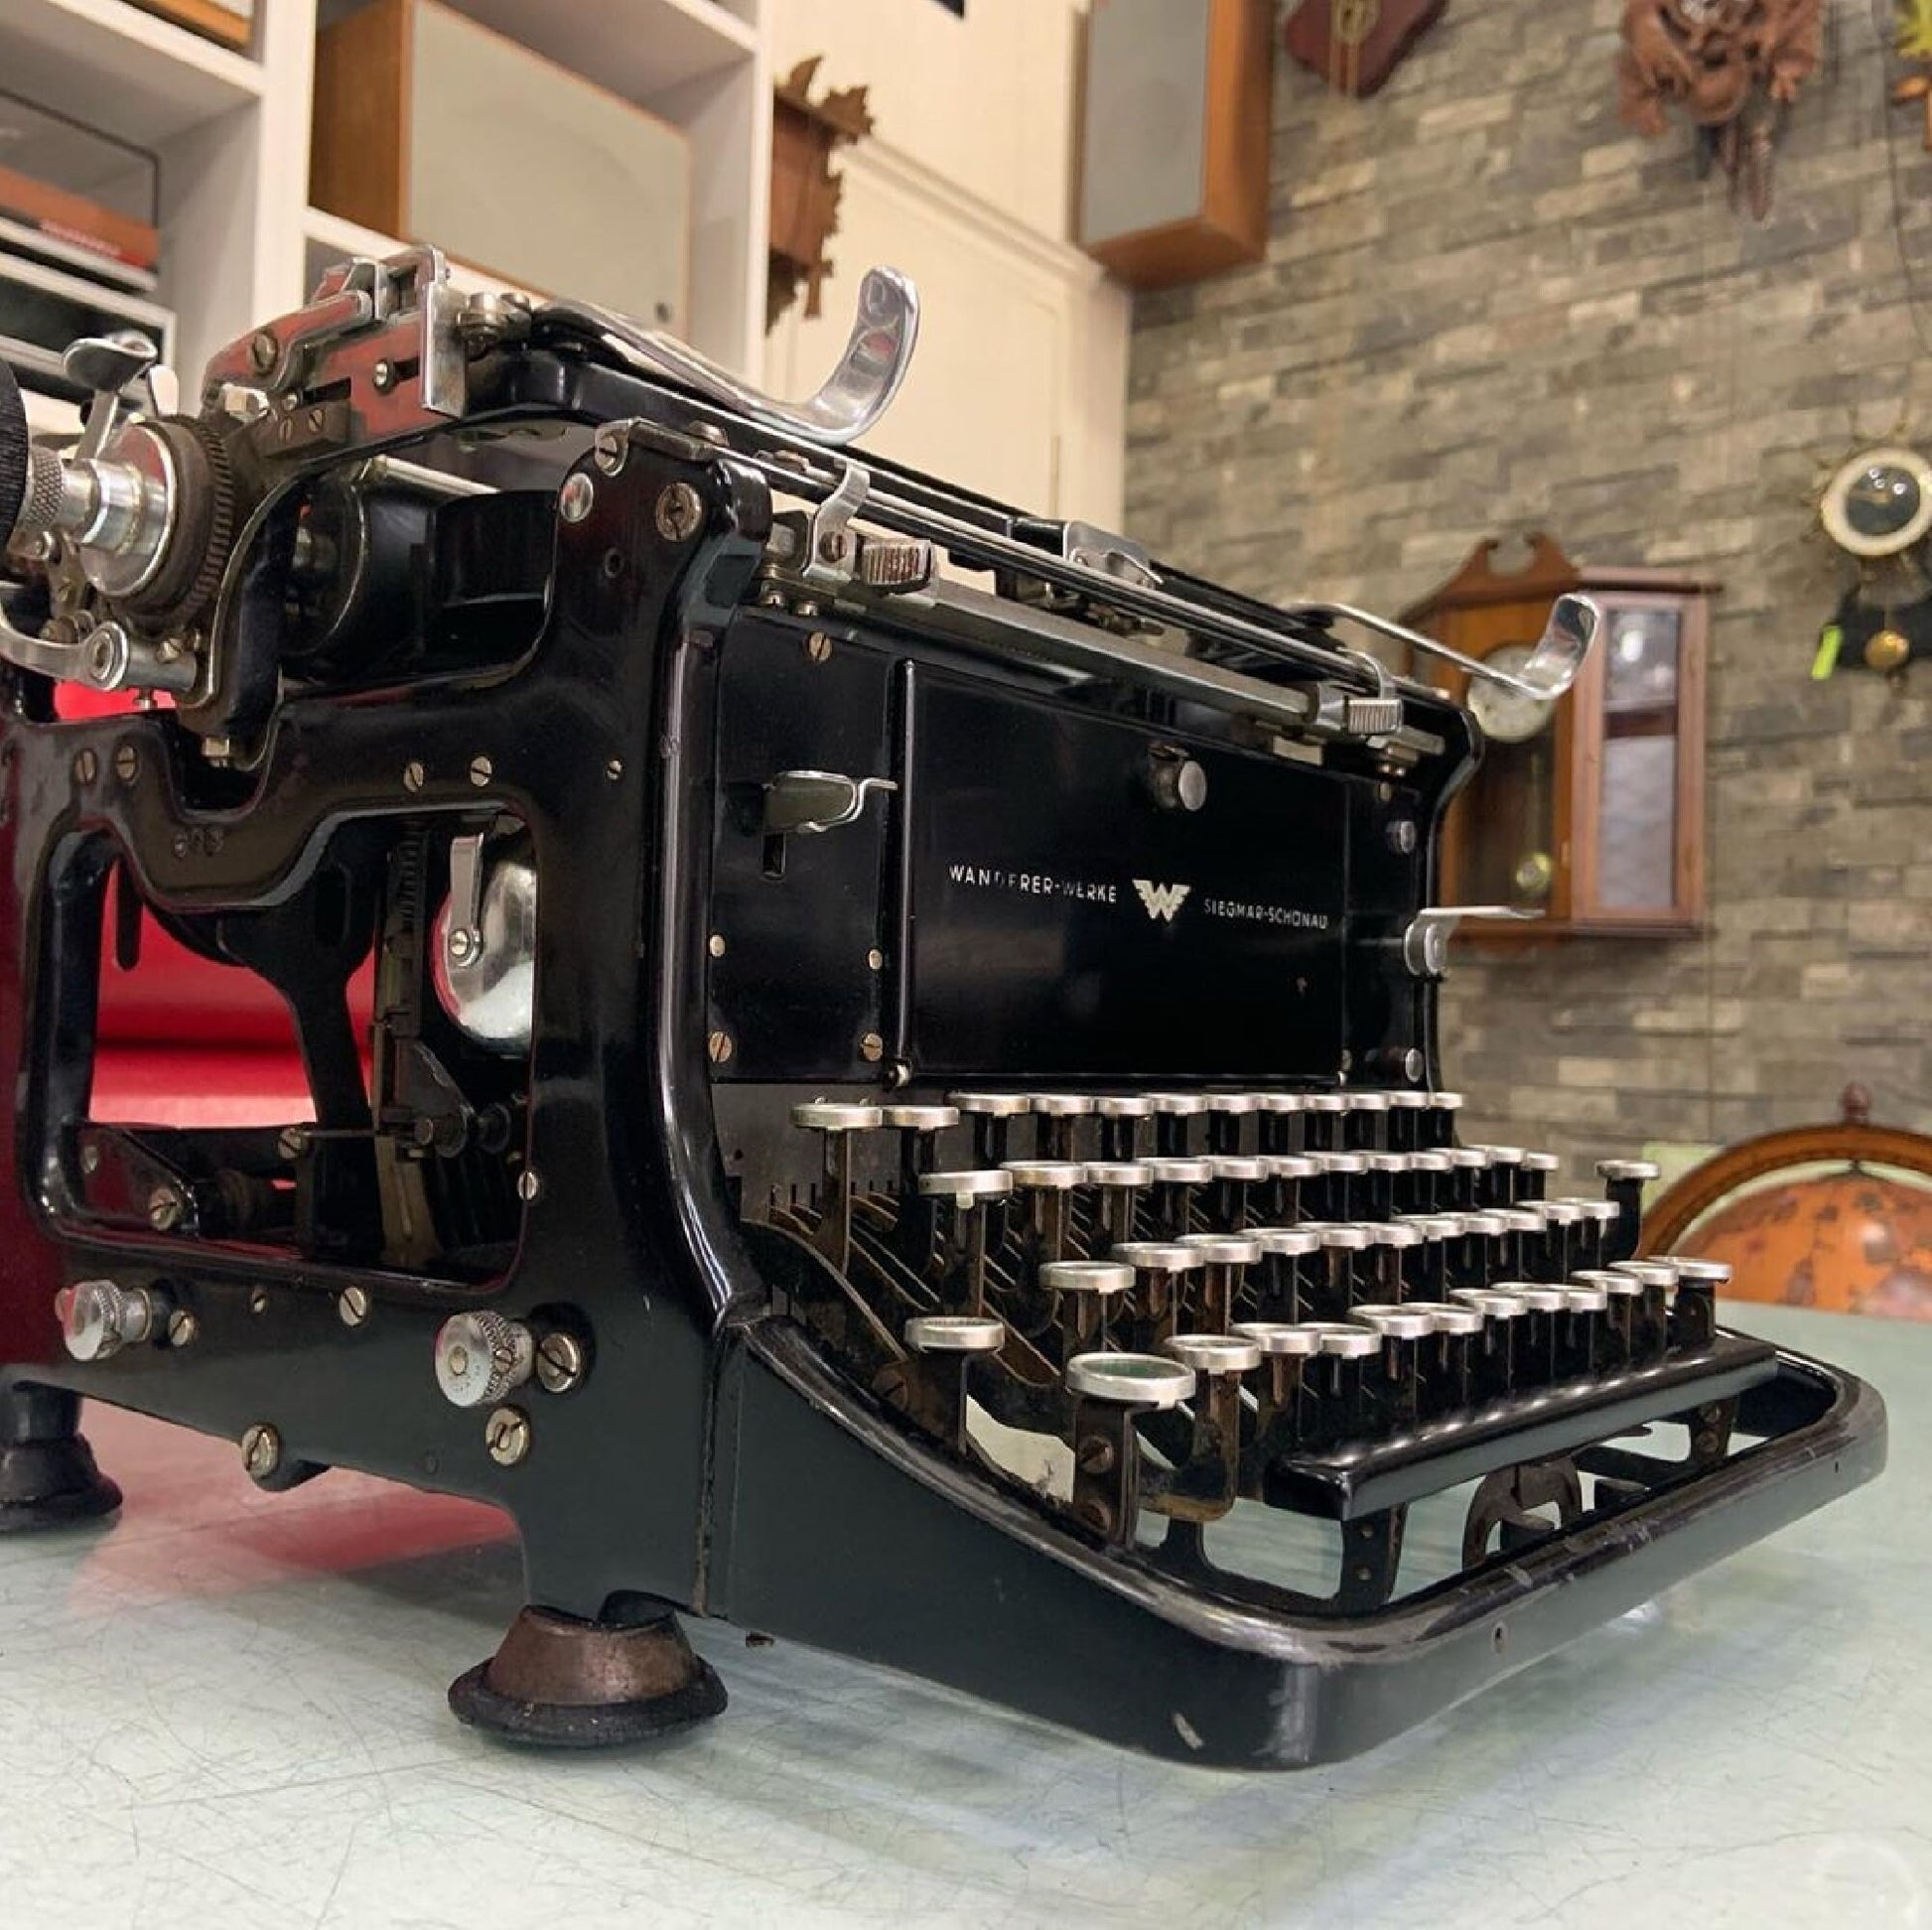 Continental Typewriter - A Working Marvel, an Exquisite Premium Gift